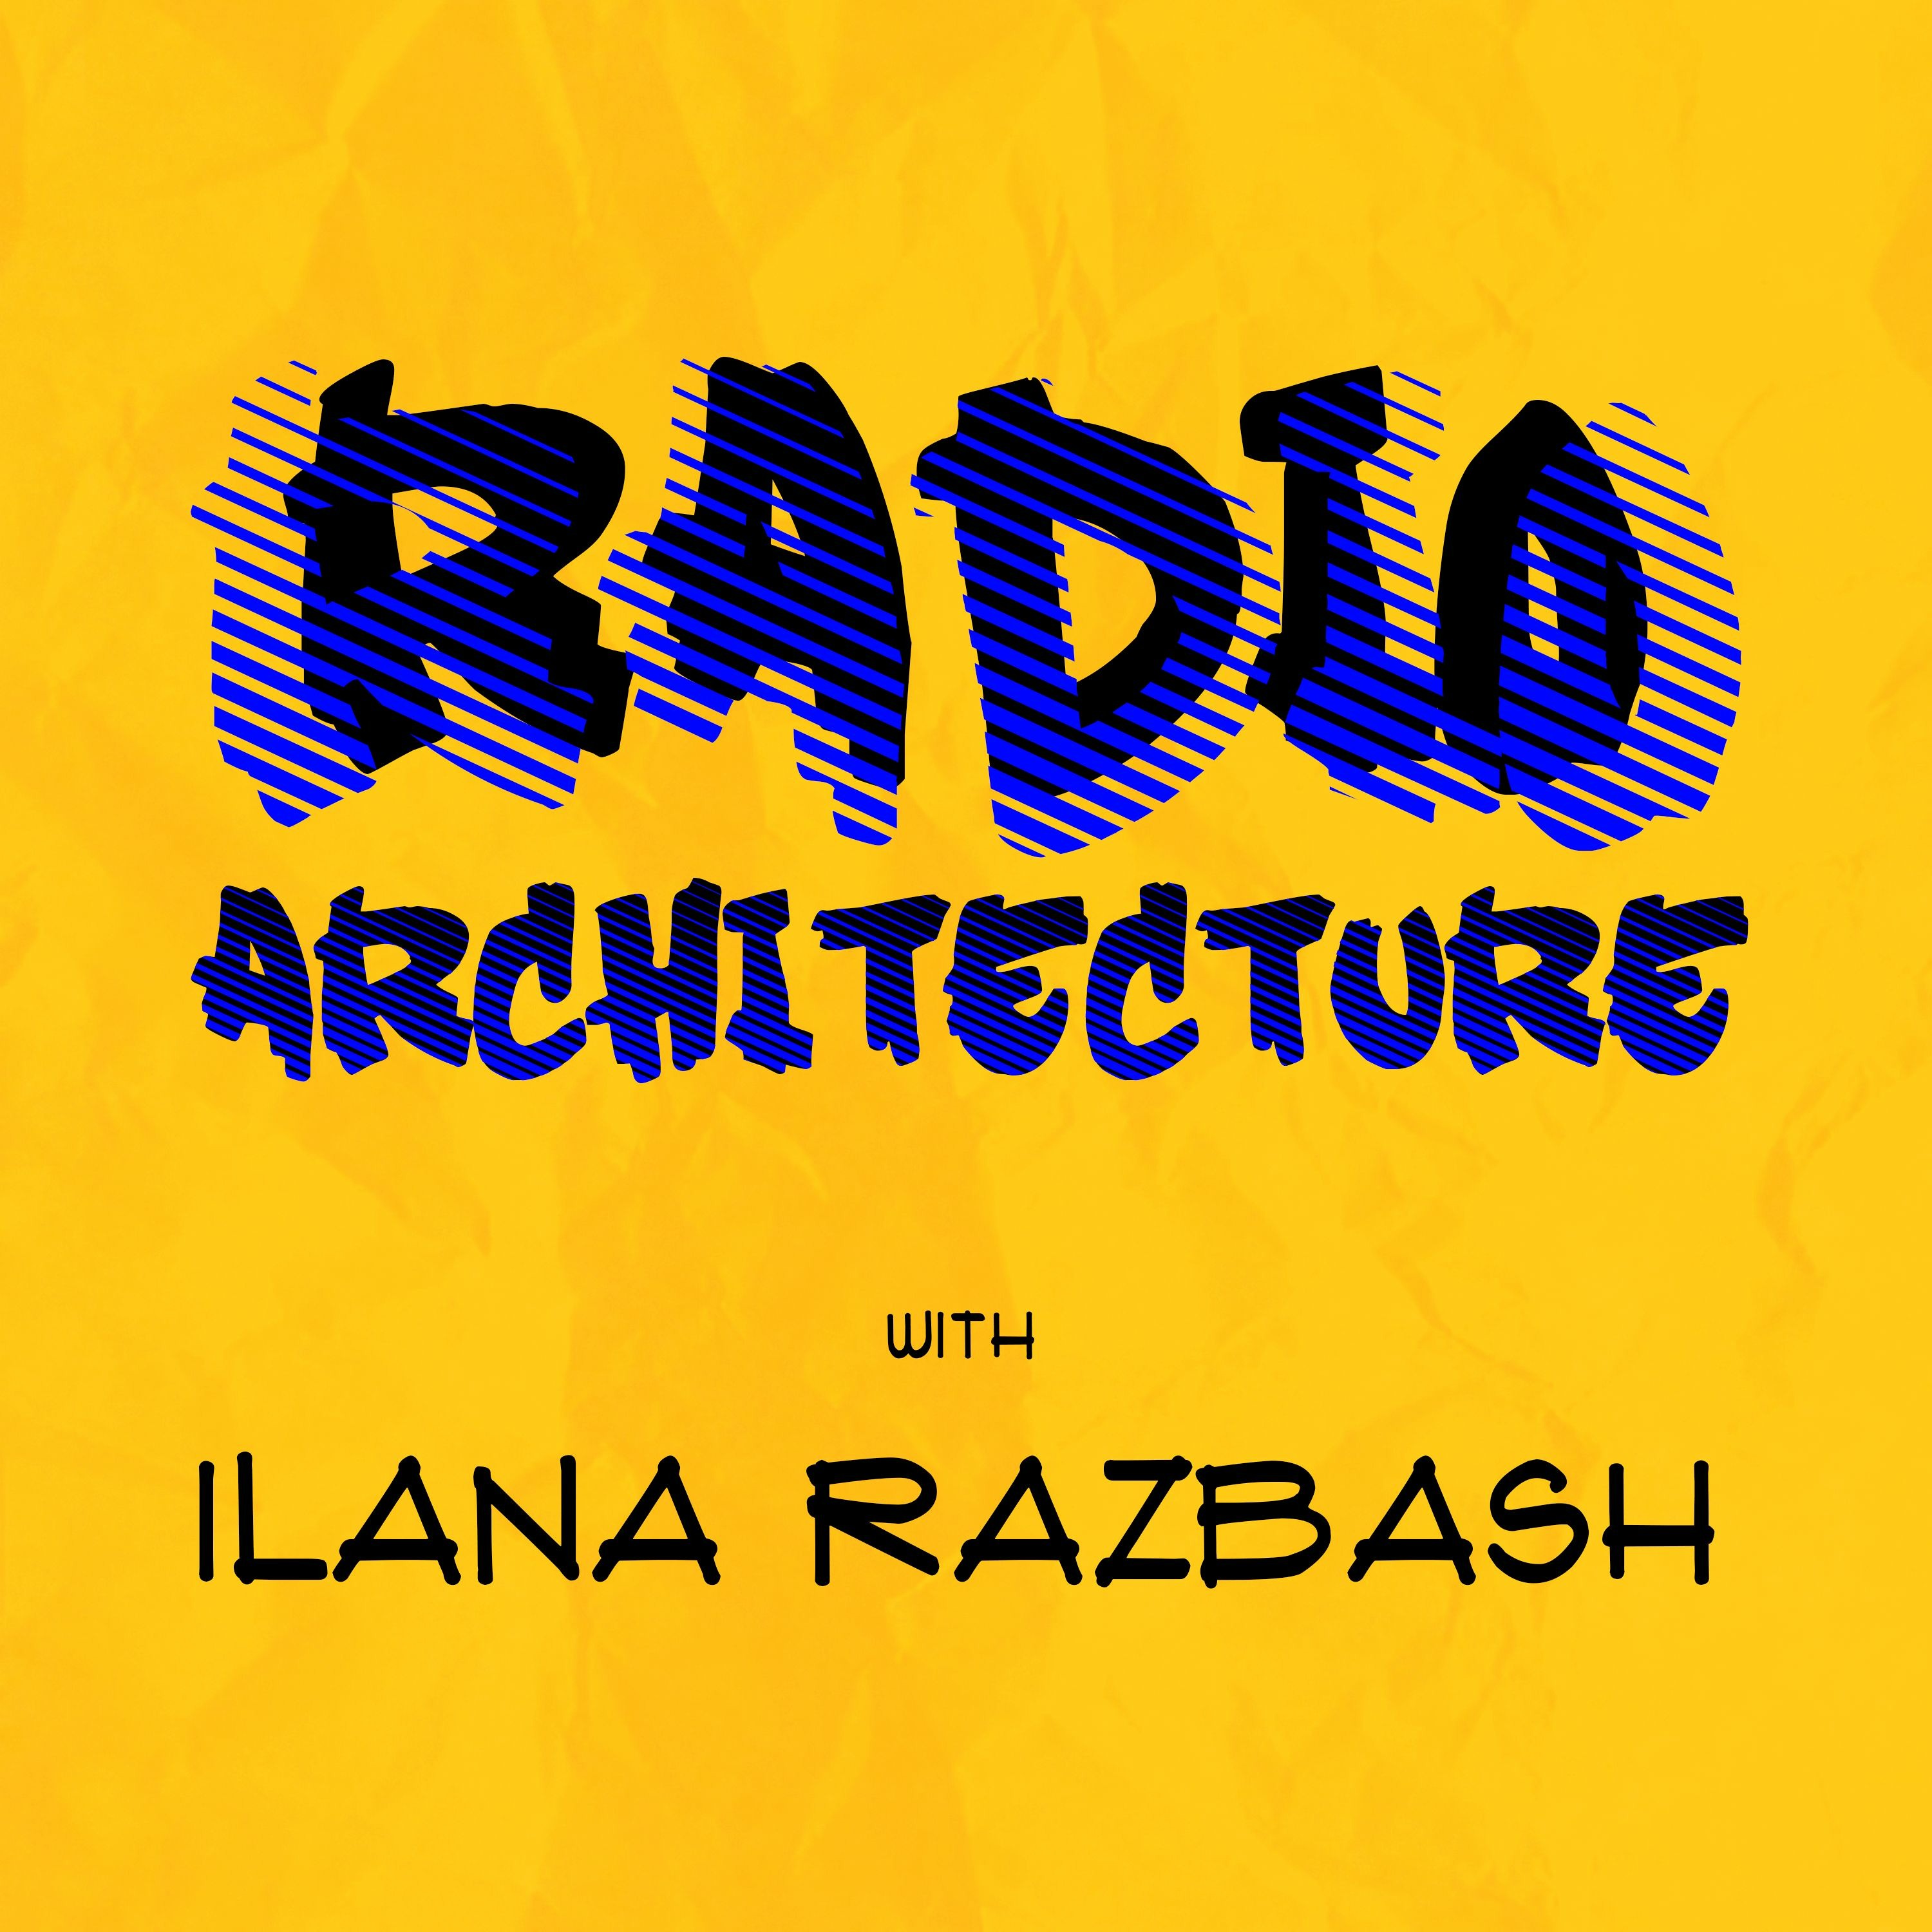 Radio Architecture With Ilana Razbash - Episode 15 (Student Special)